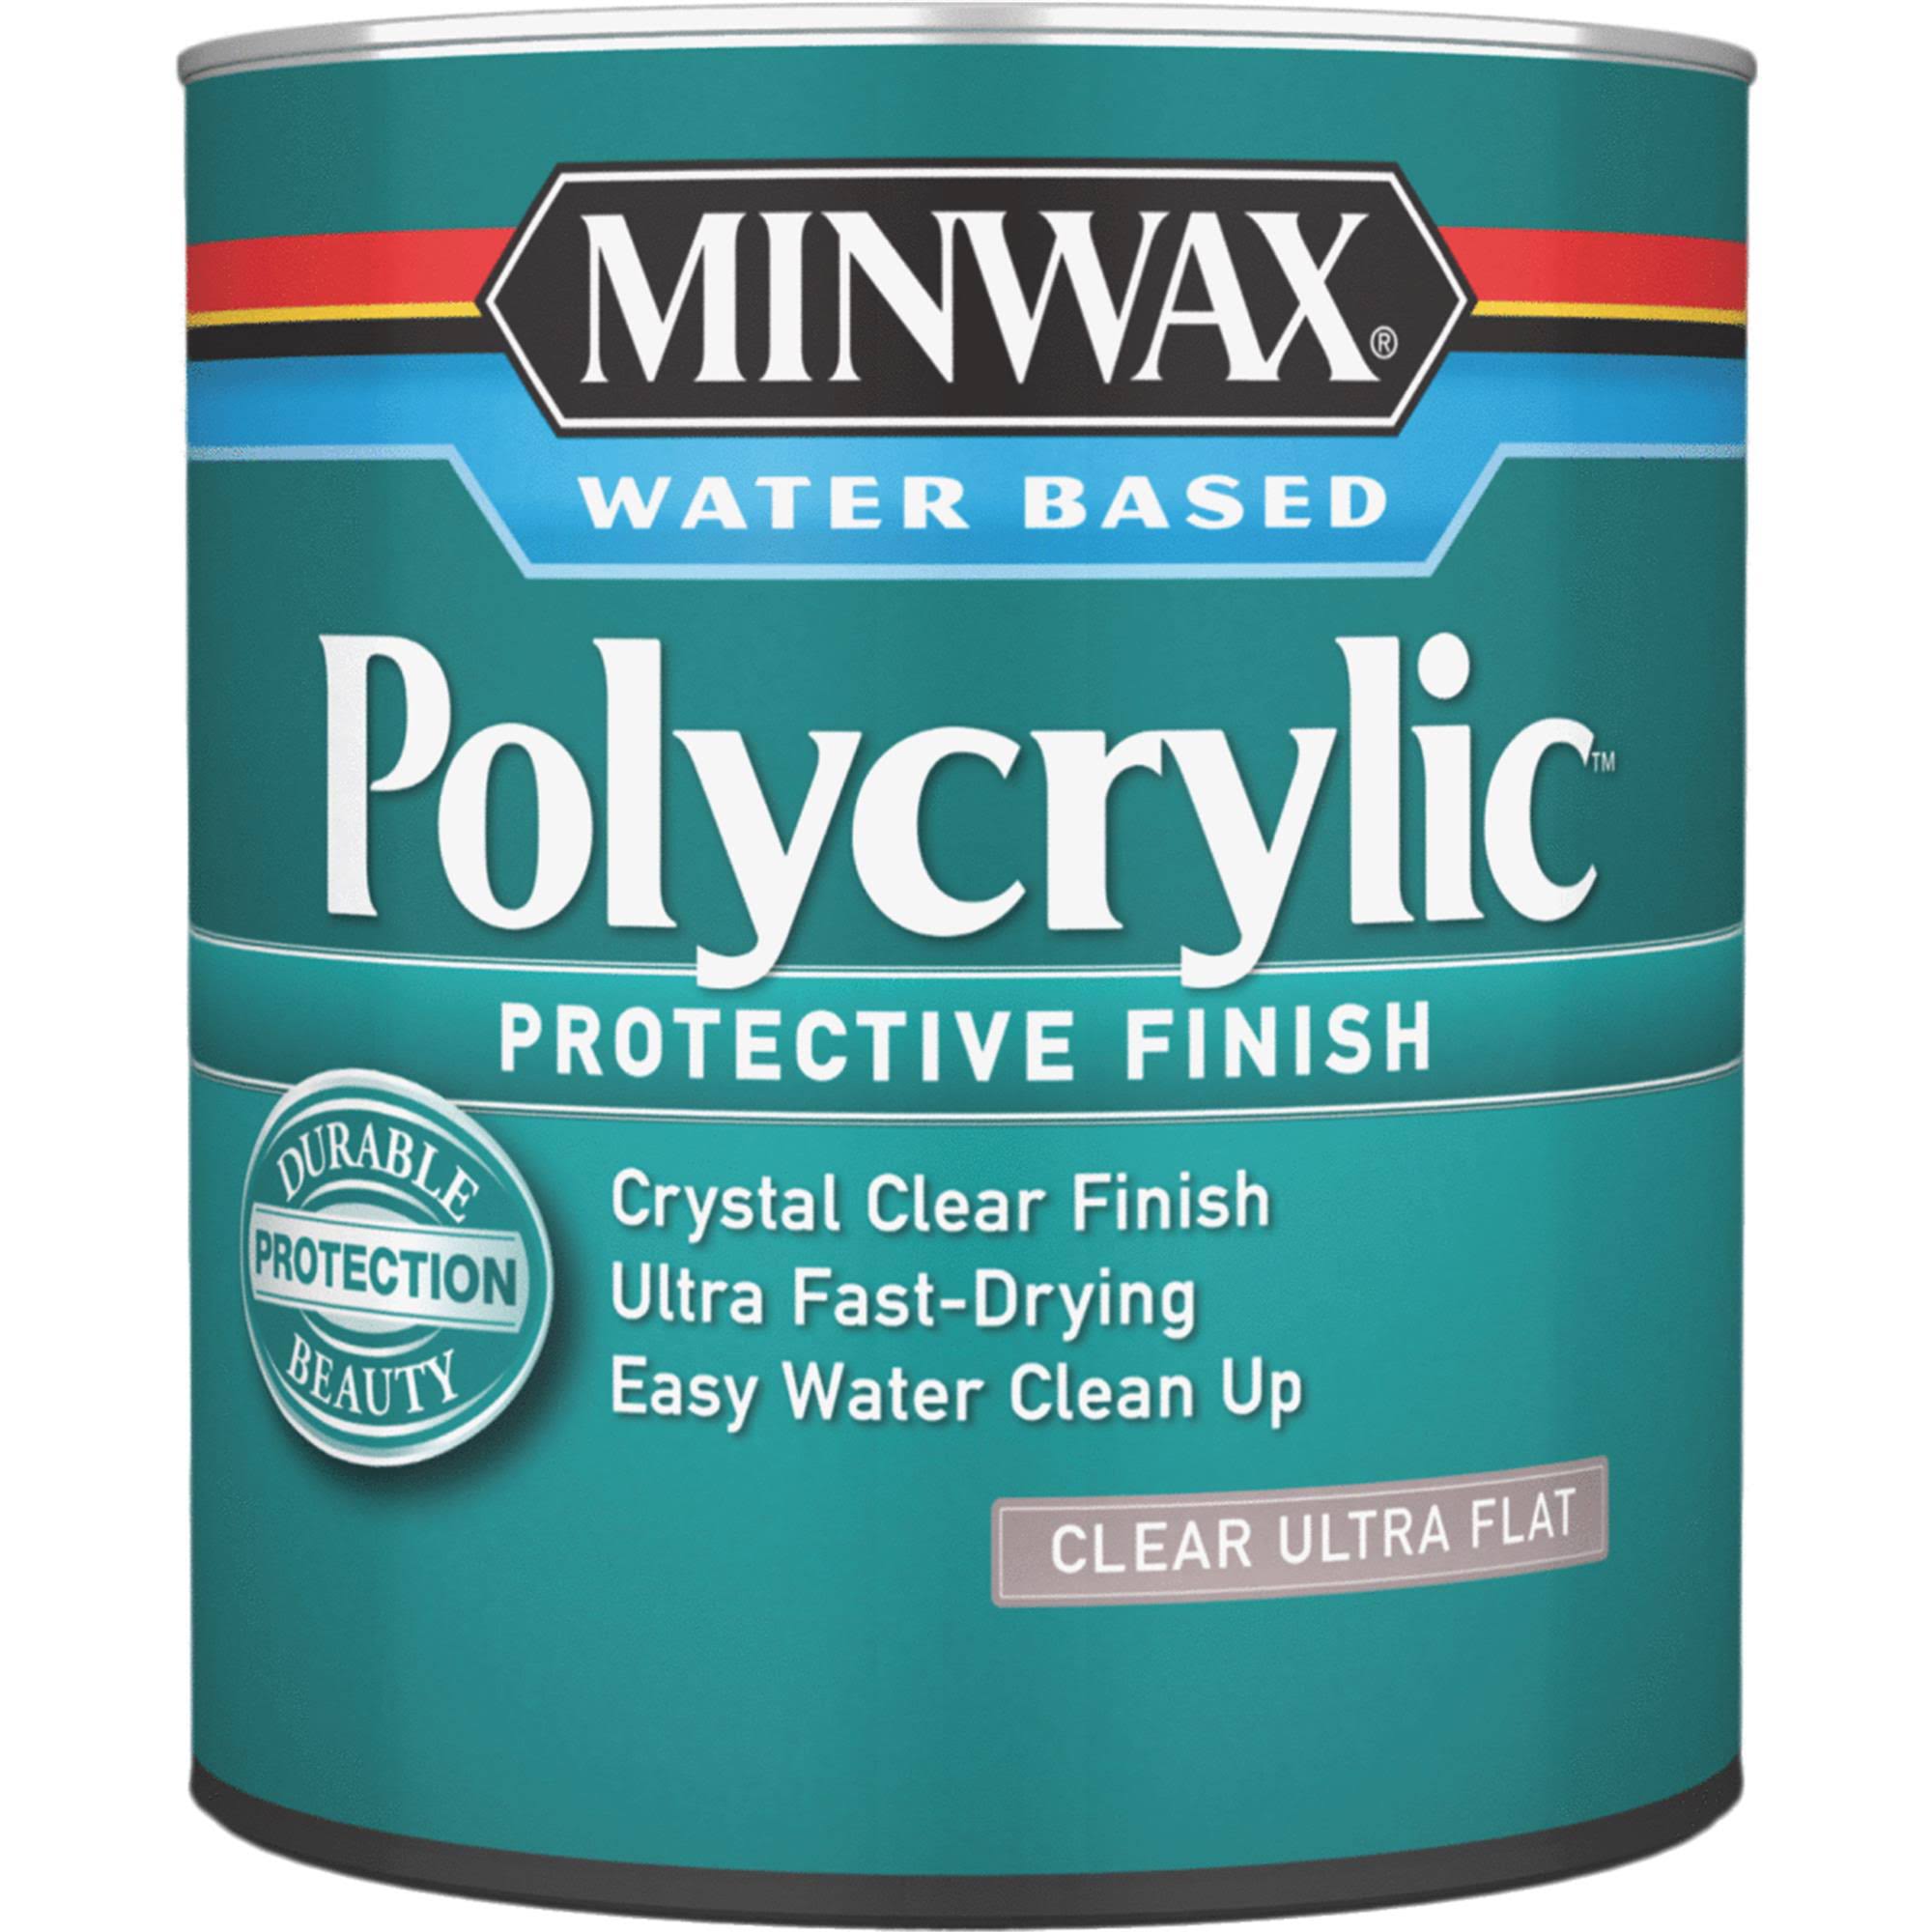 Minwax Polycrylic Clear Ultra Flat Protective Finish, 1 qt.